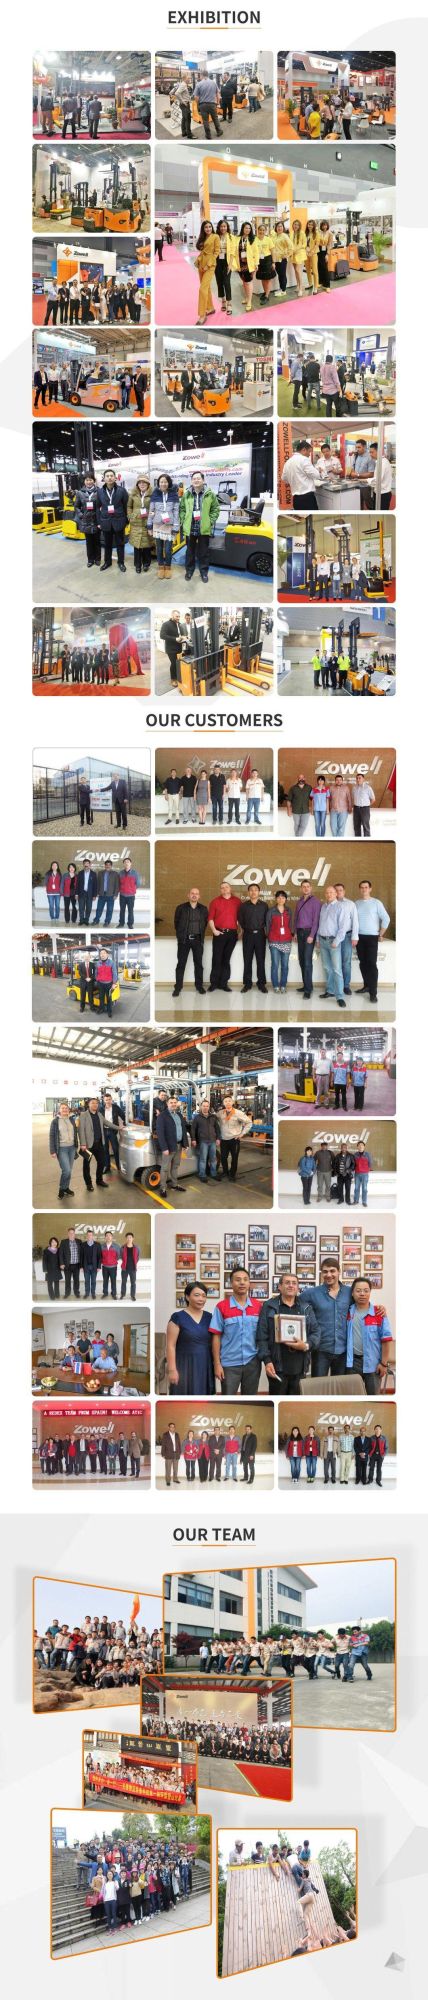 500mm 3000~5000mm Zowell Wooden Pallet 3540*1265mm Suzhou, China Forklift Lift Truck